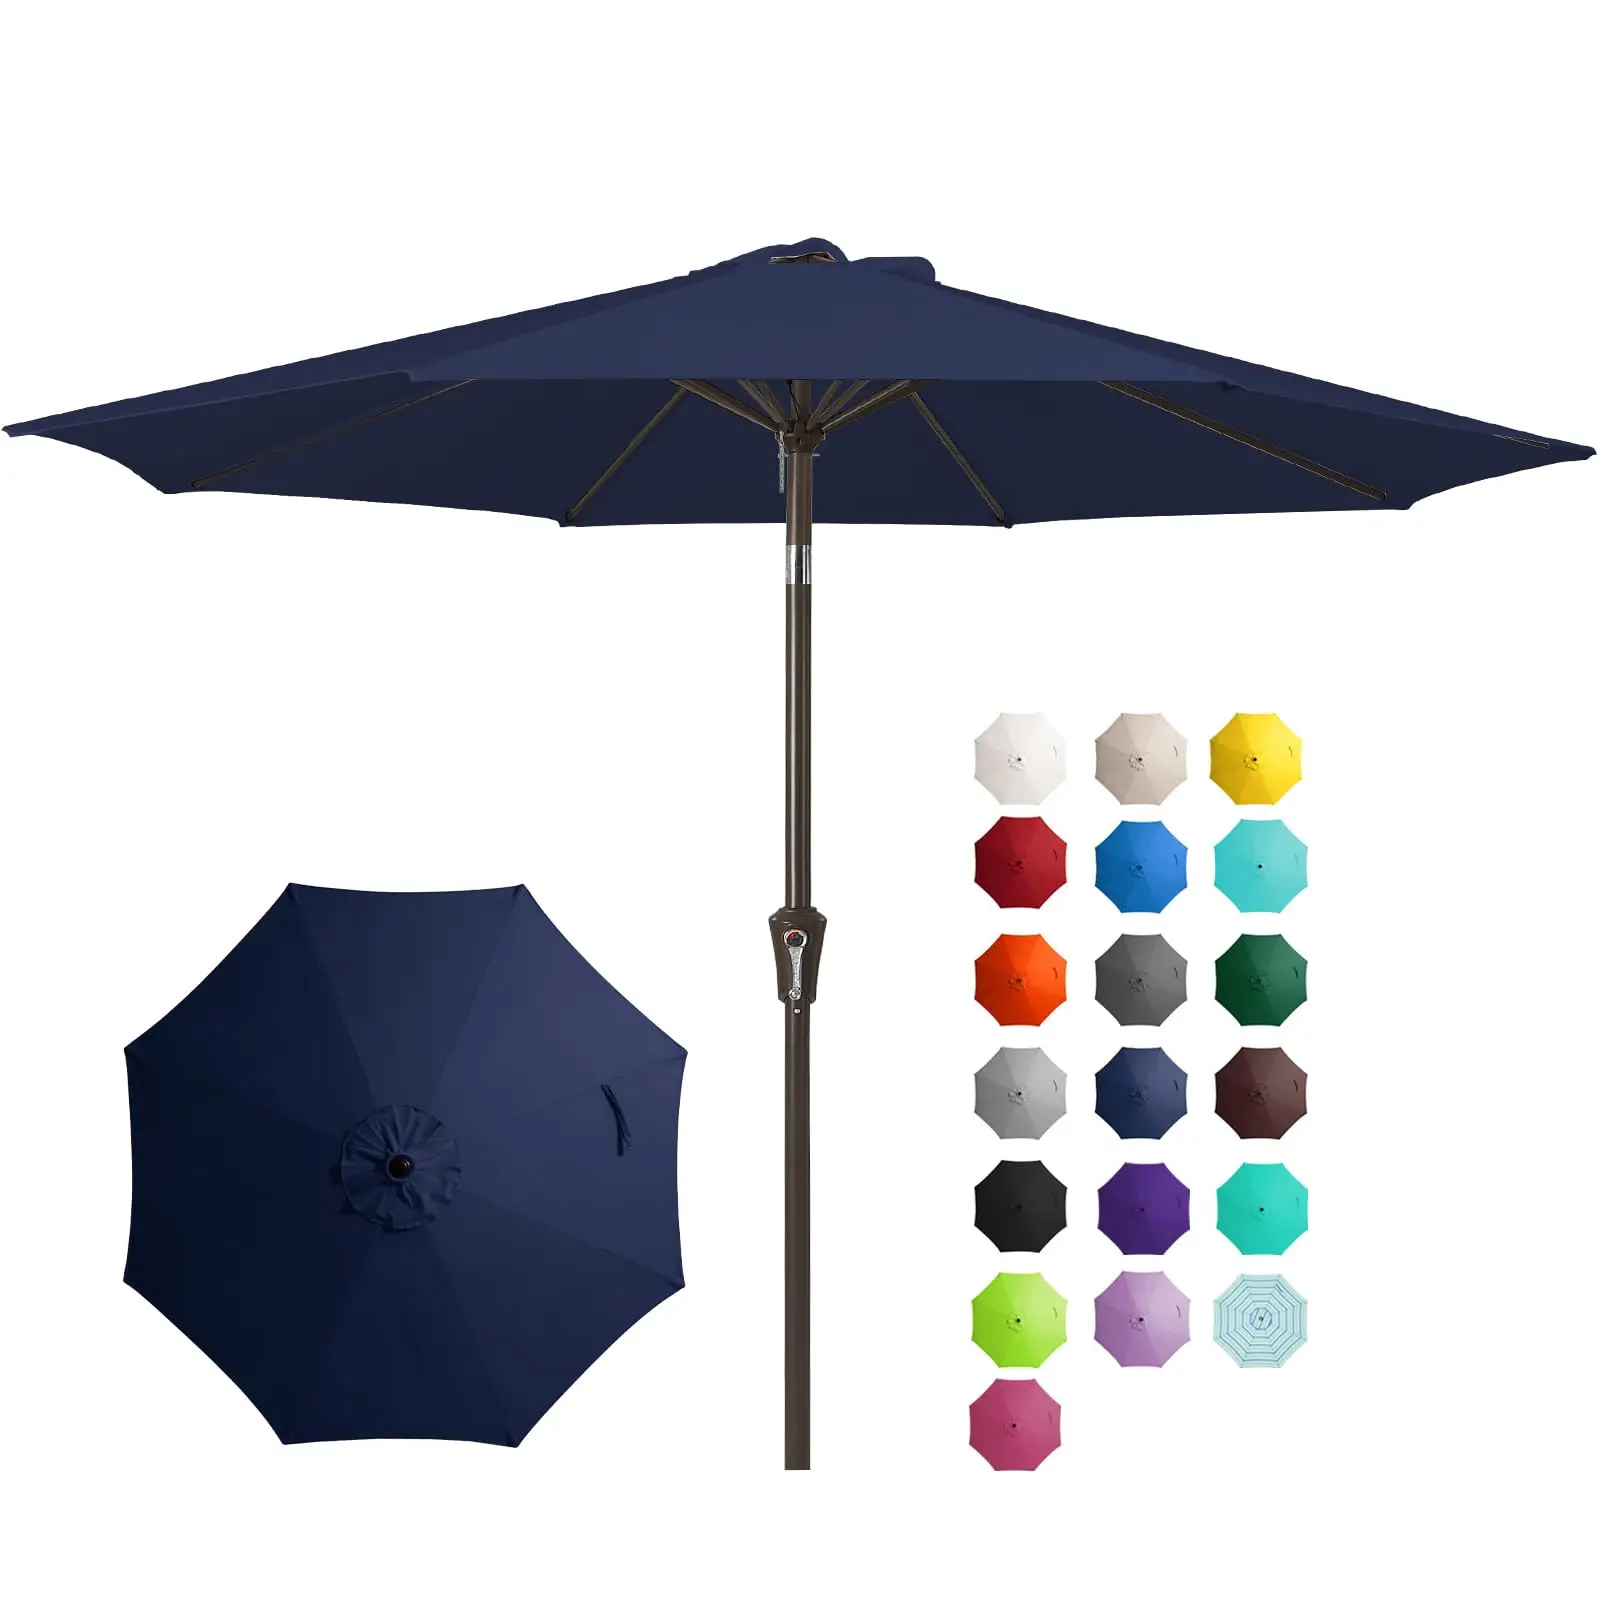 

9FT Outdoor Patio Umbrella Outdoor Table Umbrella, Market Umbrella 8 Sturdy Ribs UV Protection Waterproof for Garden,Navy Blue